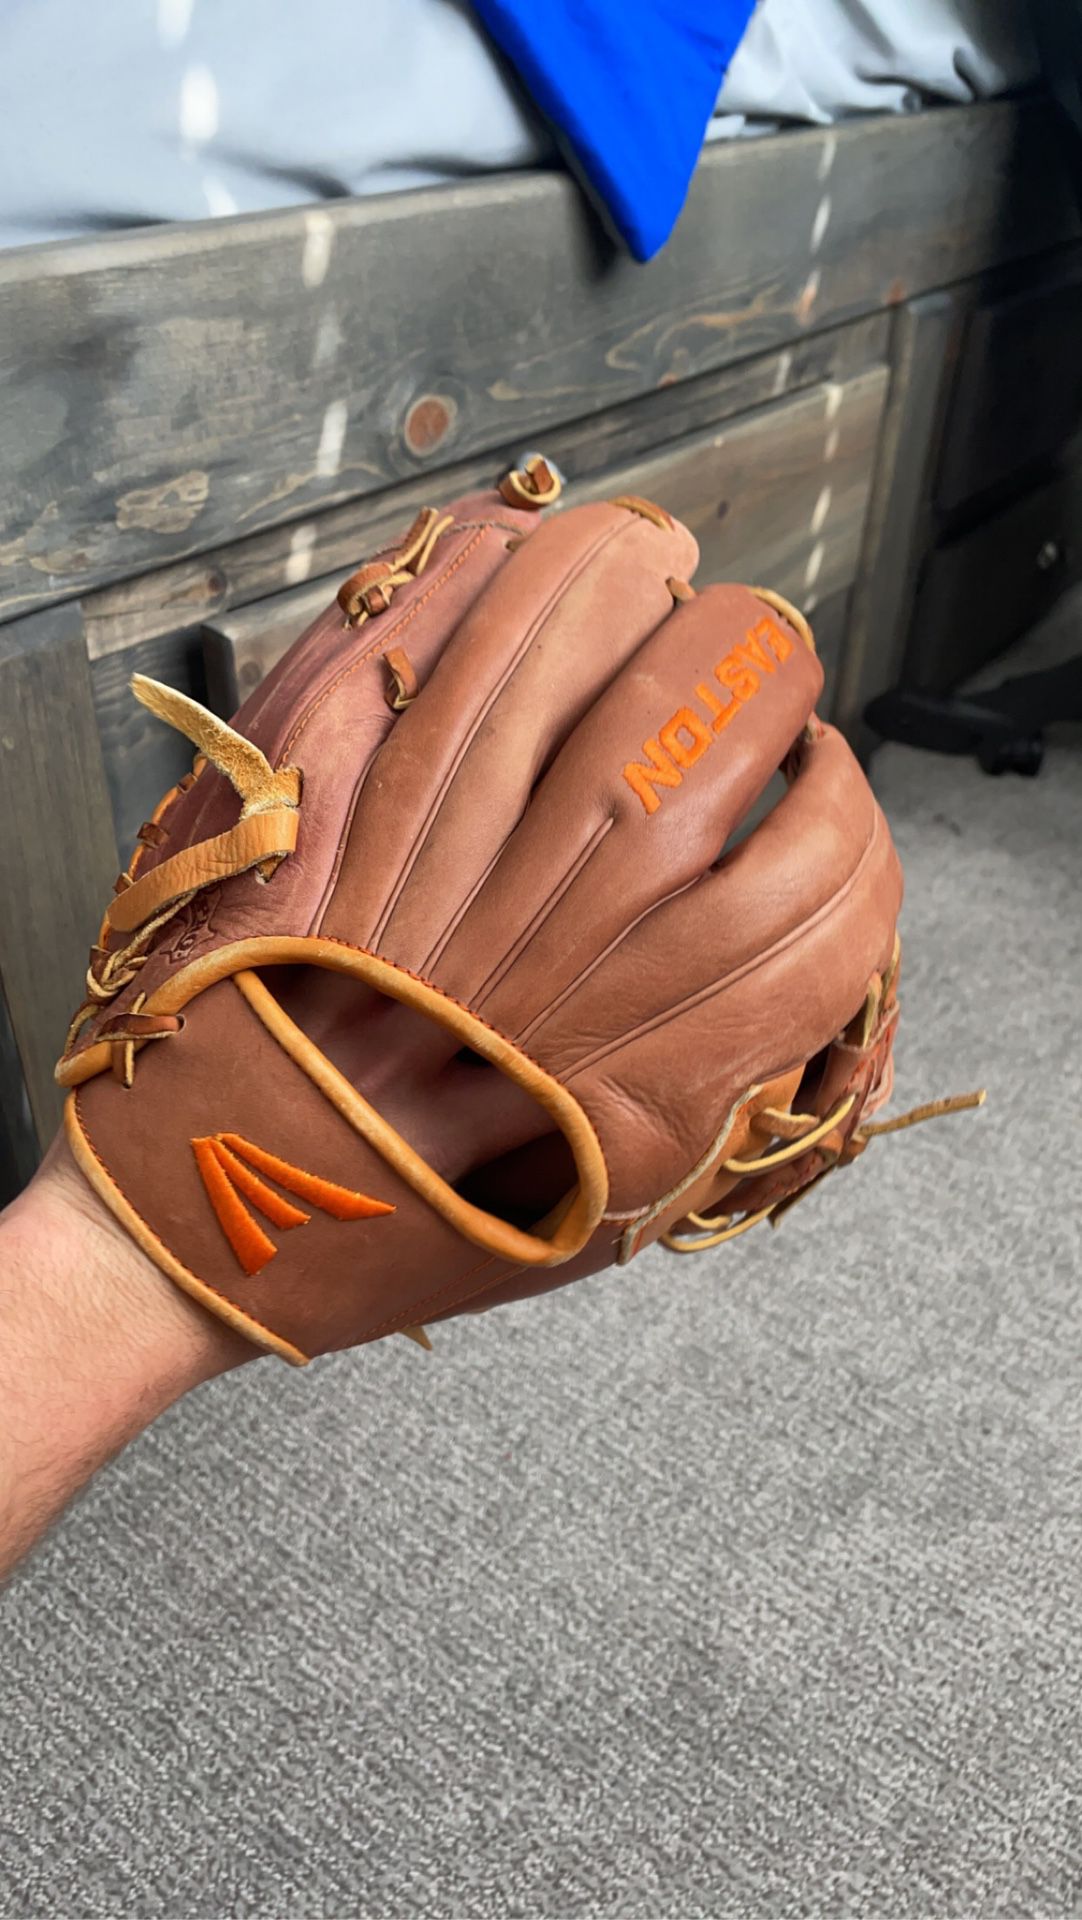 Easton Baseball Glove Used 3 Times